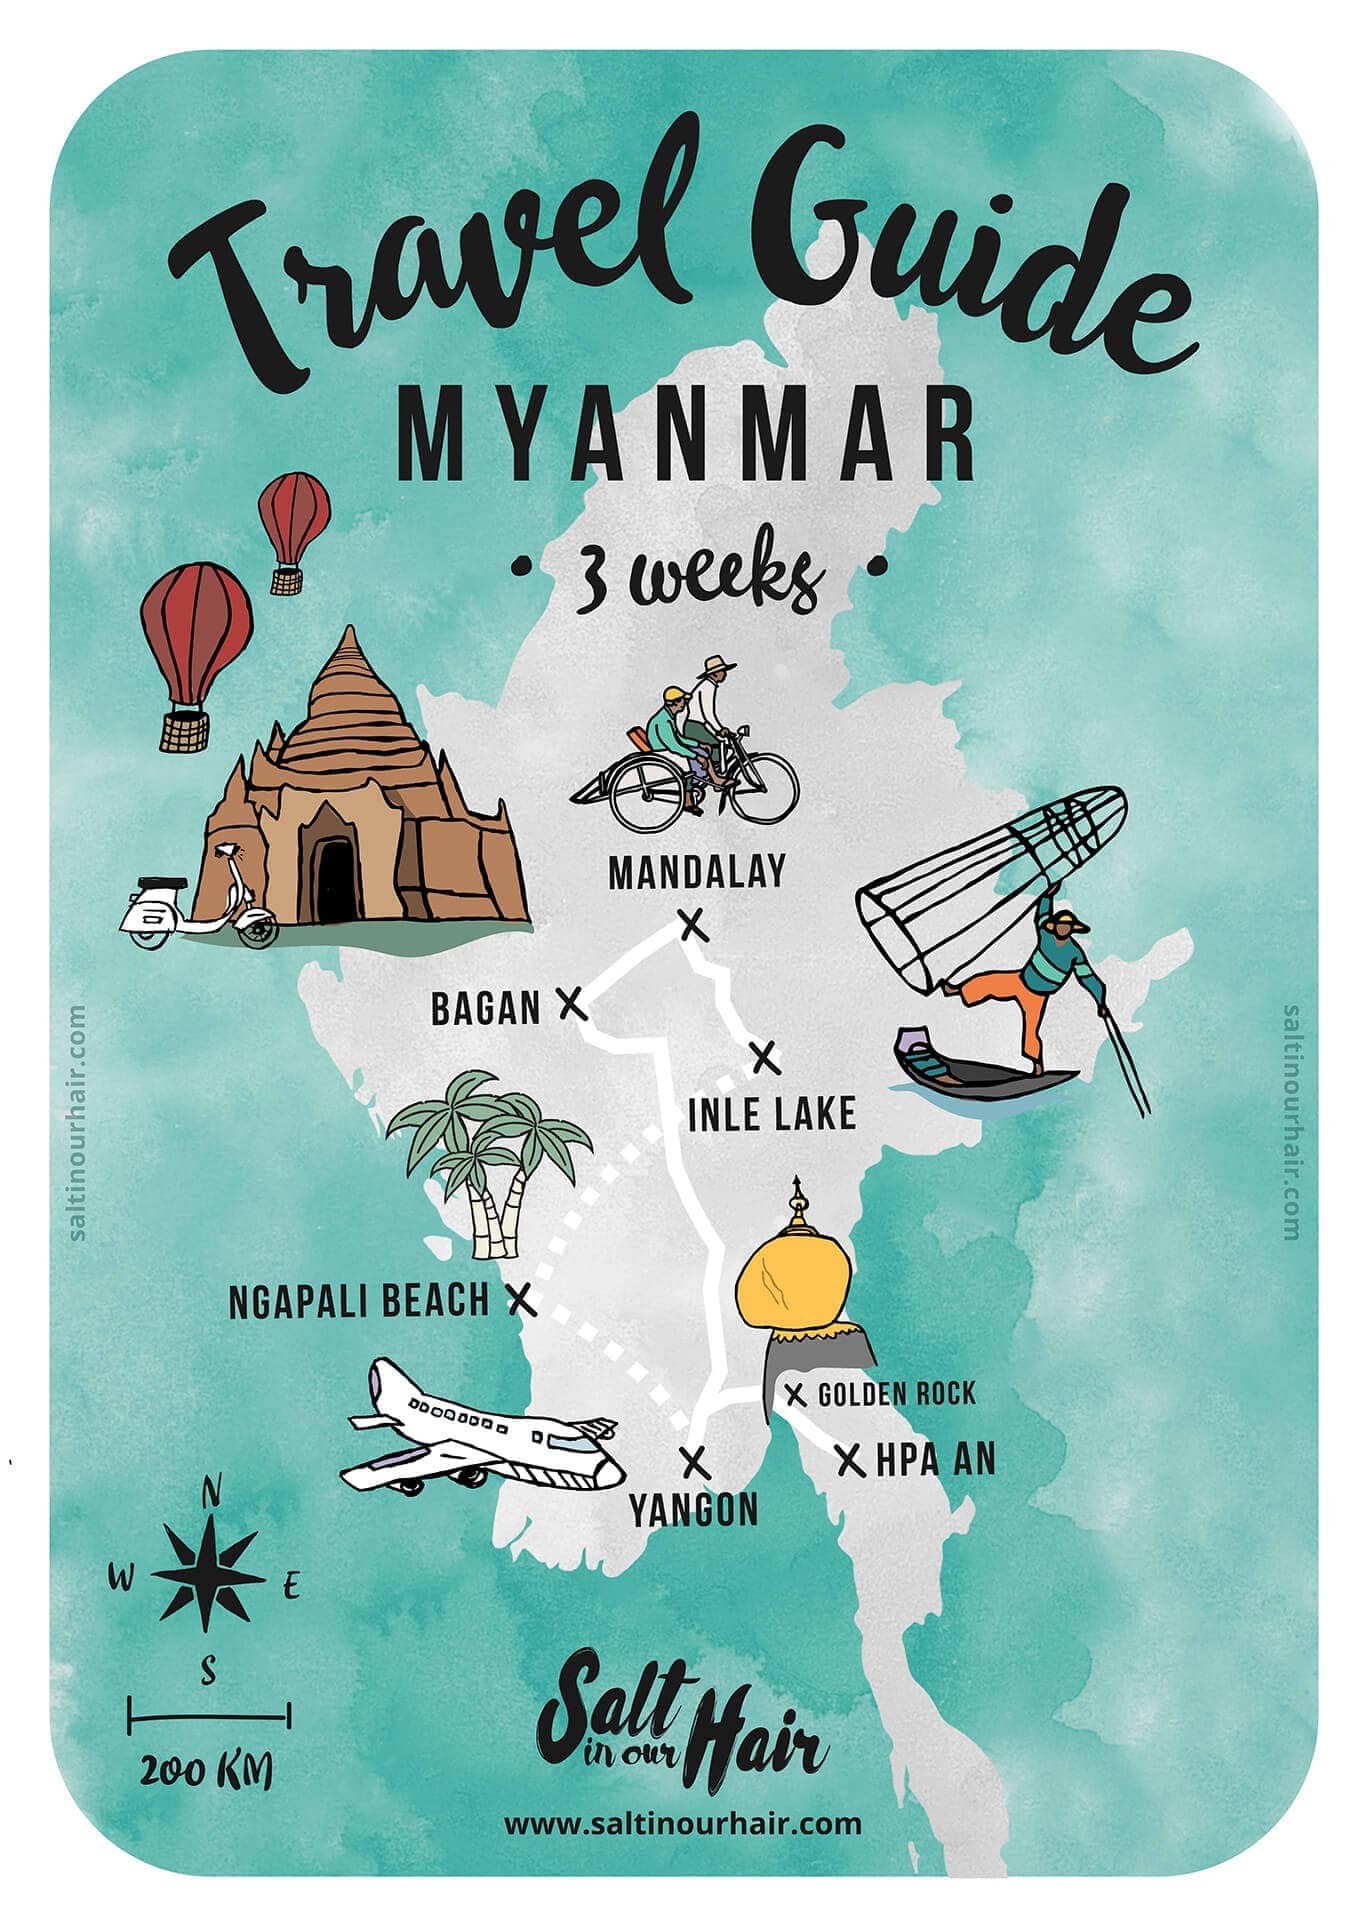 myanmar reisgids routekaart